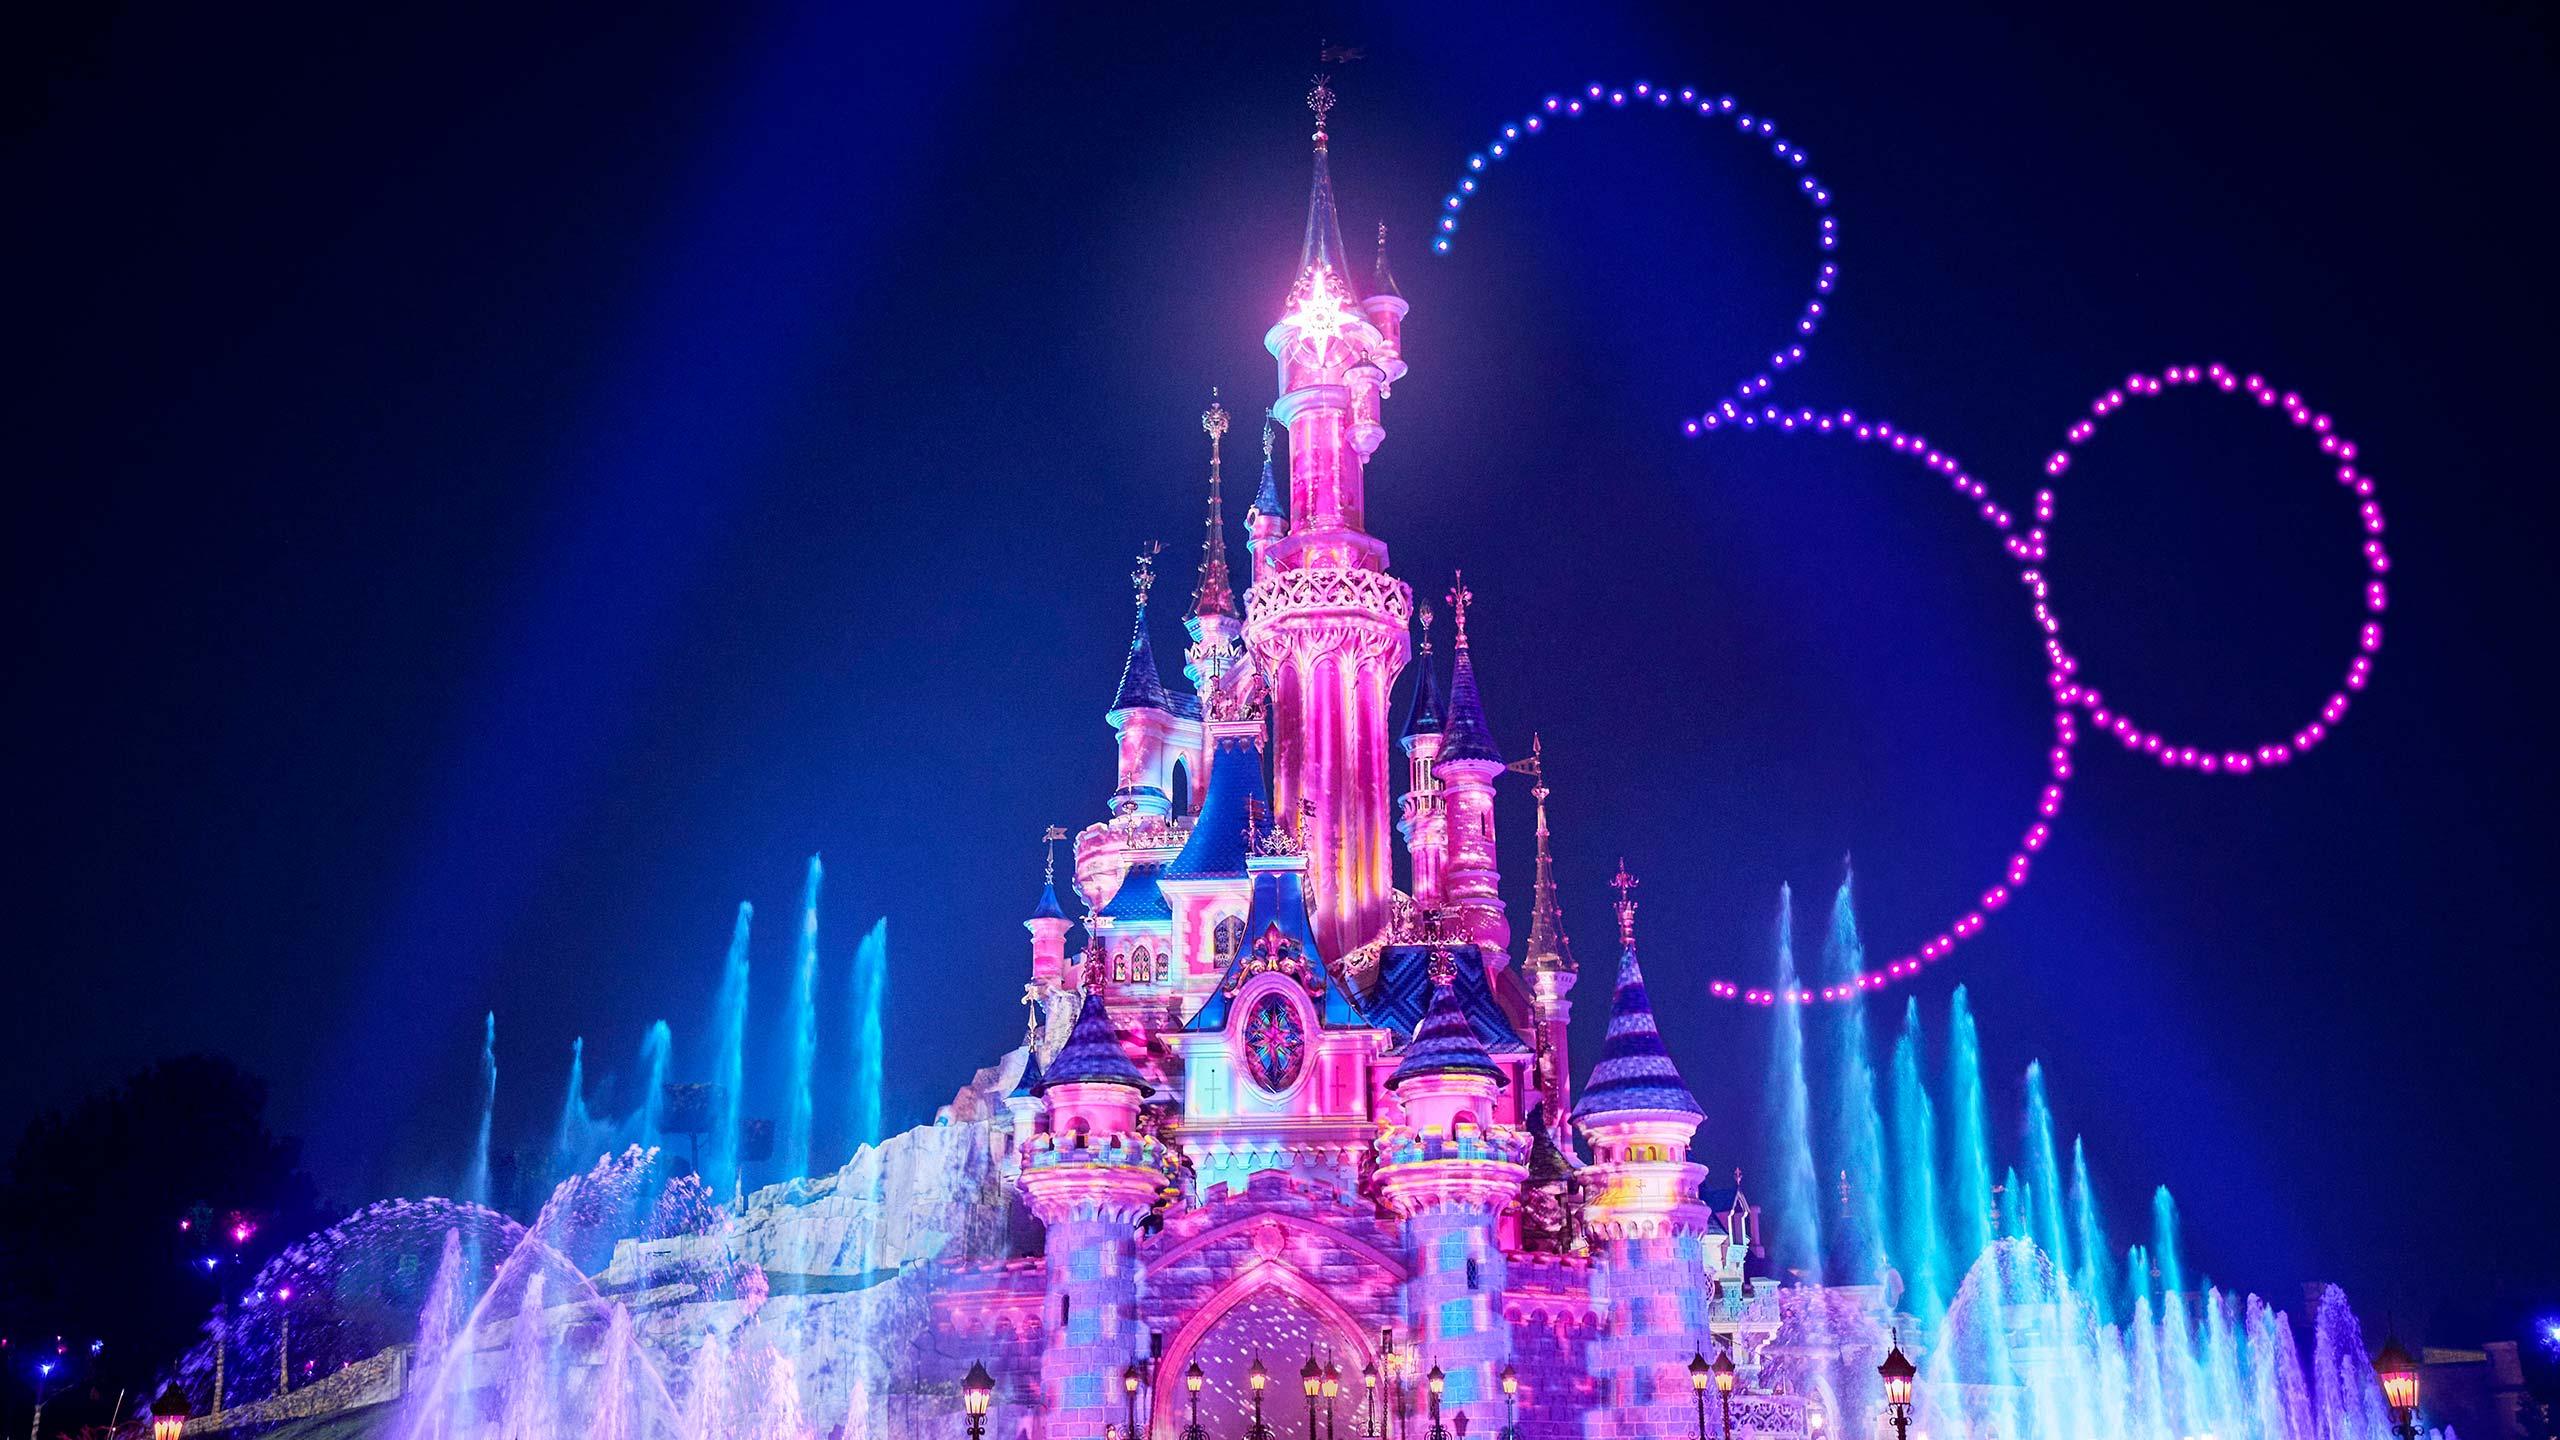 Disney DLight Disneyland Paris